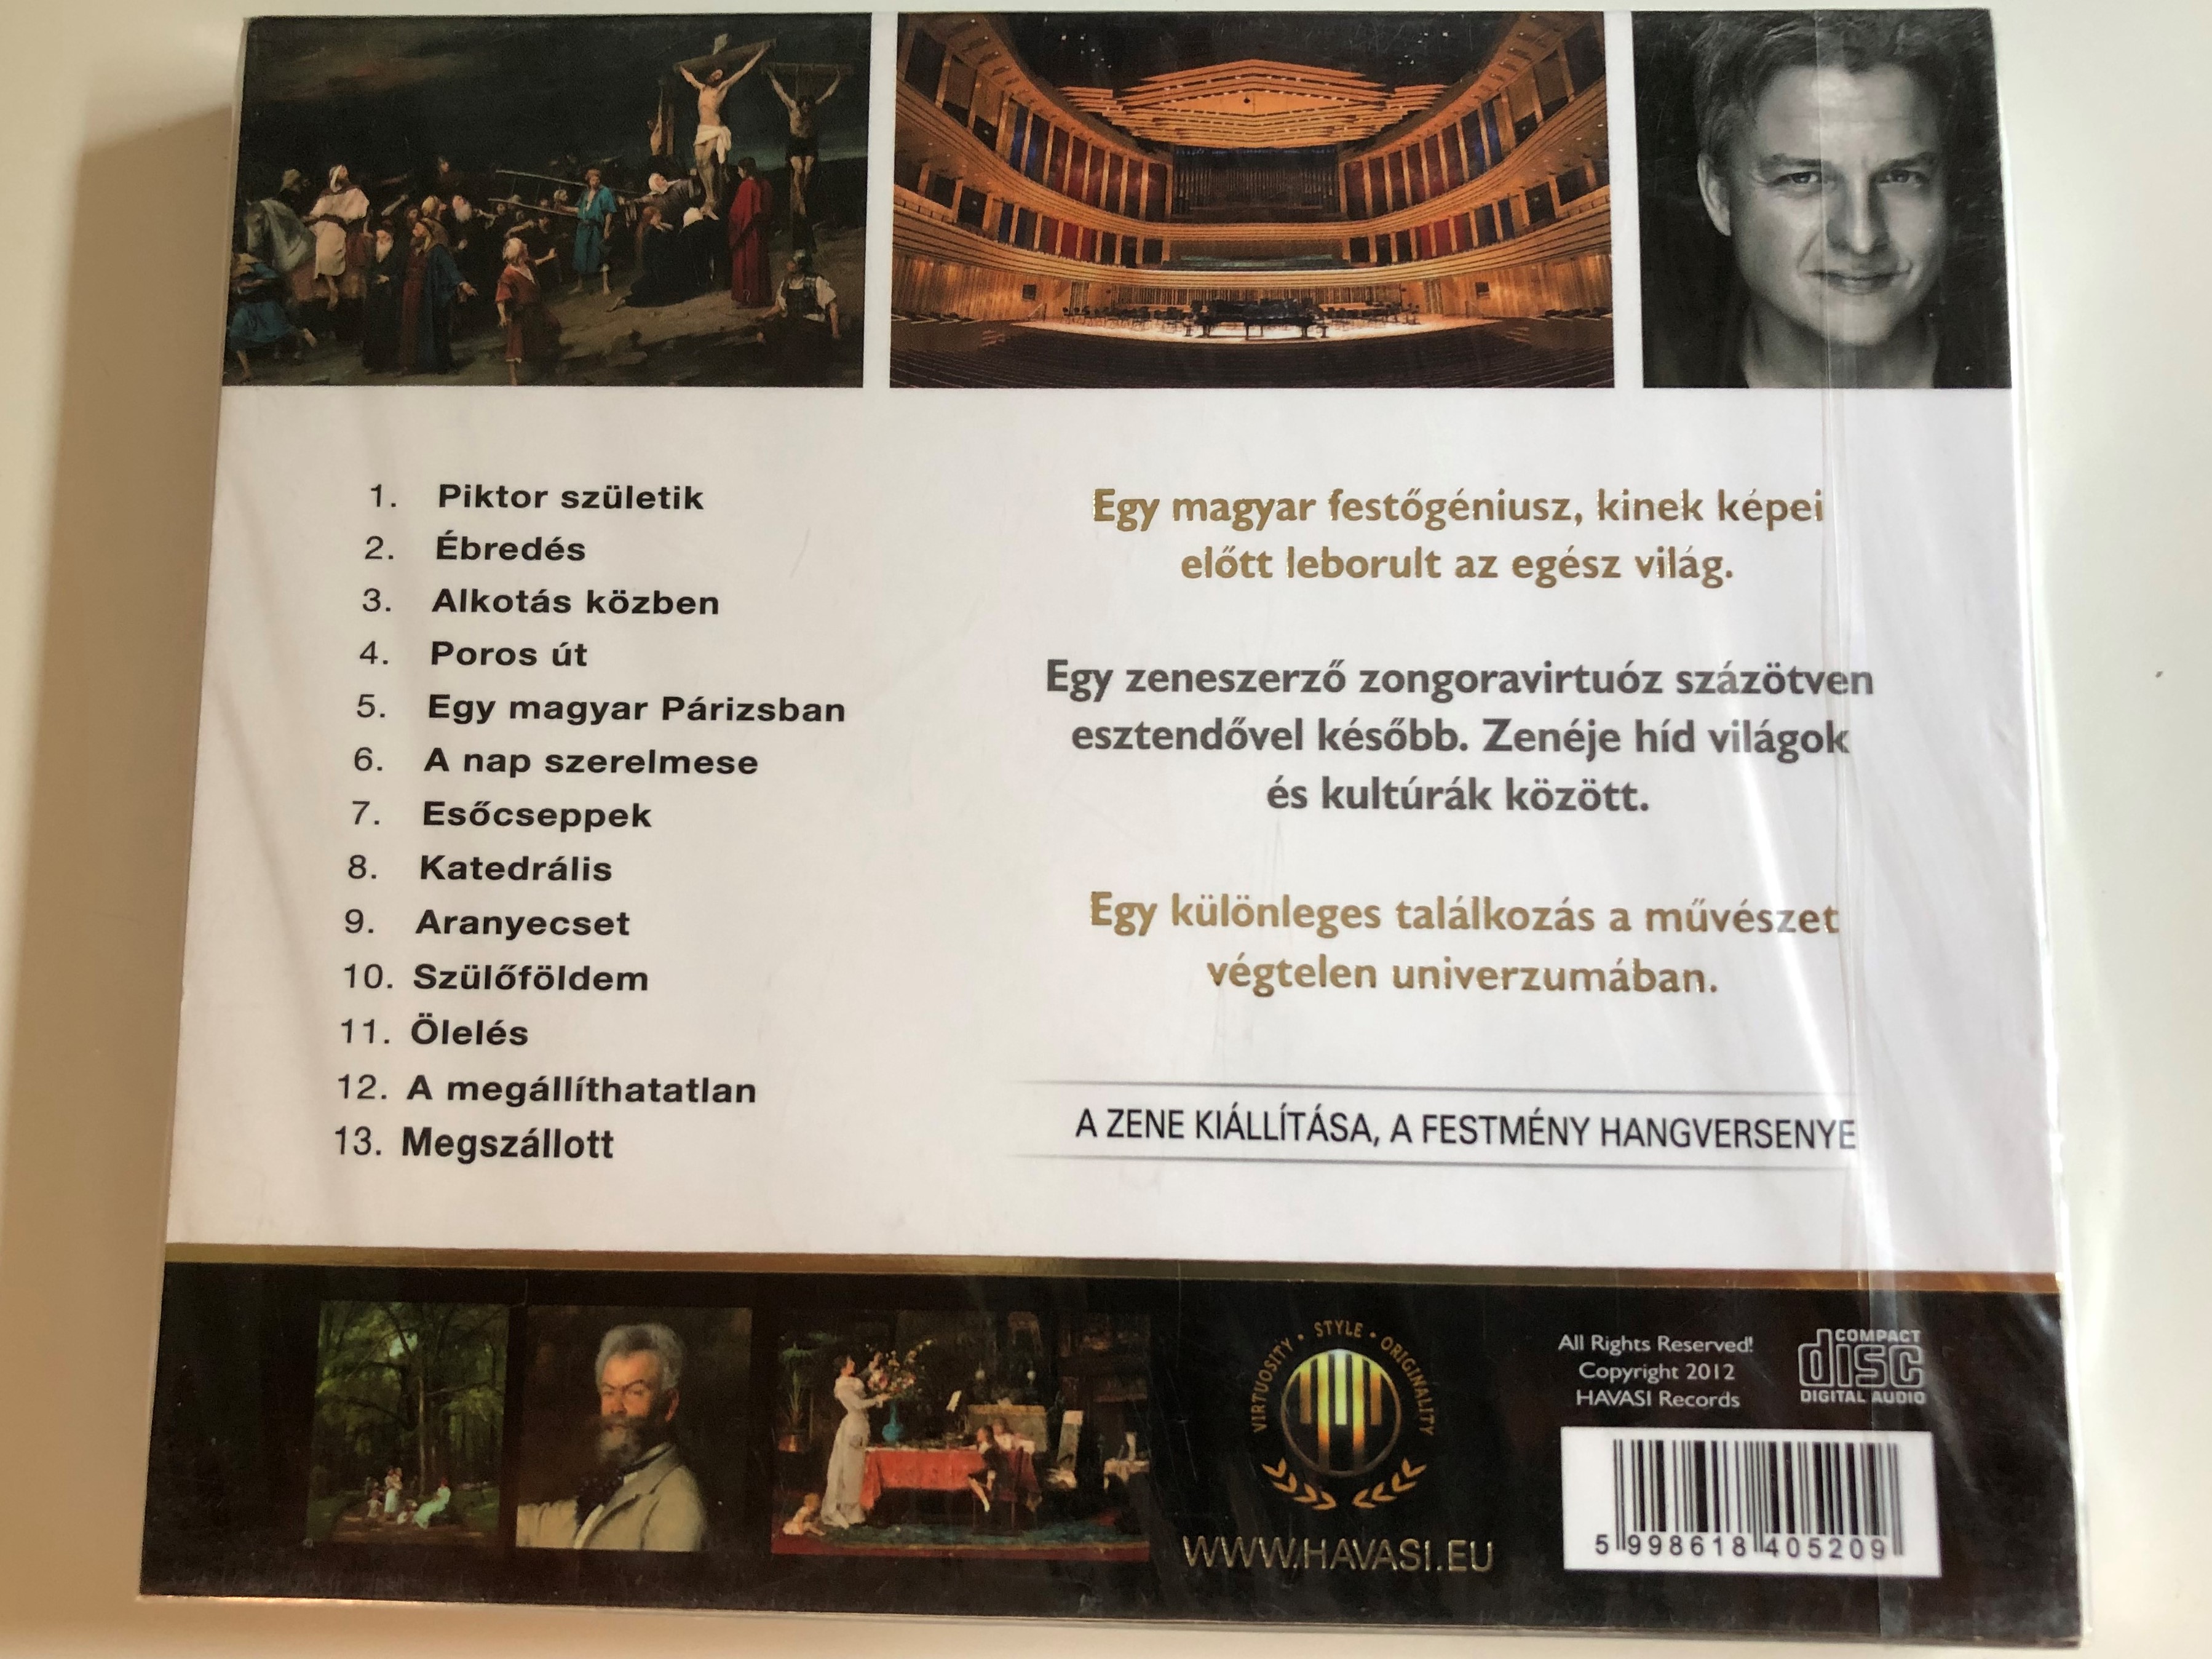 havasi-munk-csy-ecset-s-zongora-zenei-tisztelges-a-magyar-festogeniusz-elott.-kozremukodik-budafoki-dohnanyi-szimfonikus-zenekar-audio-cd-2012-5998618405209-2-.jpg